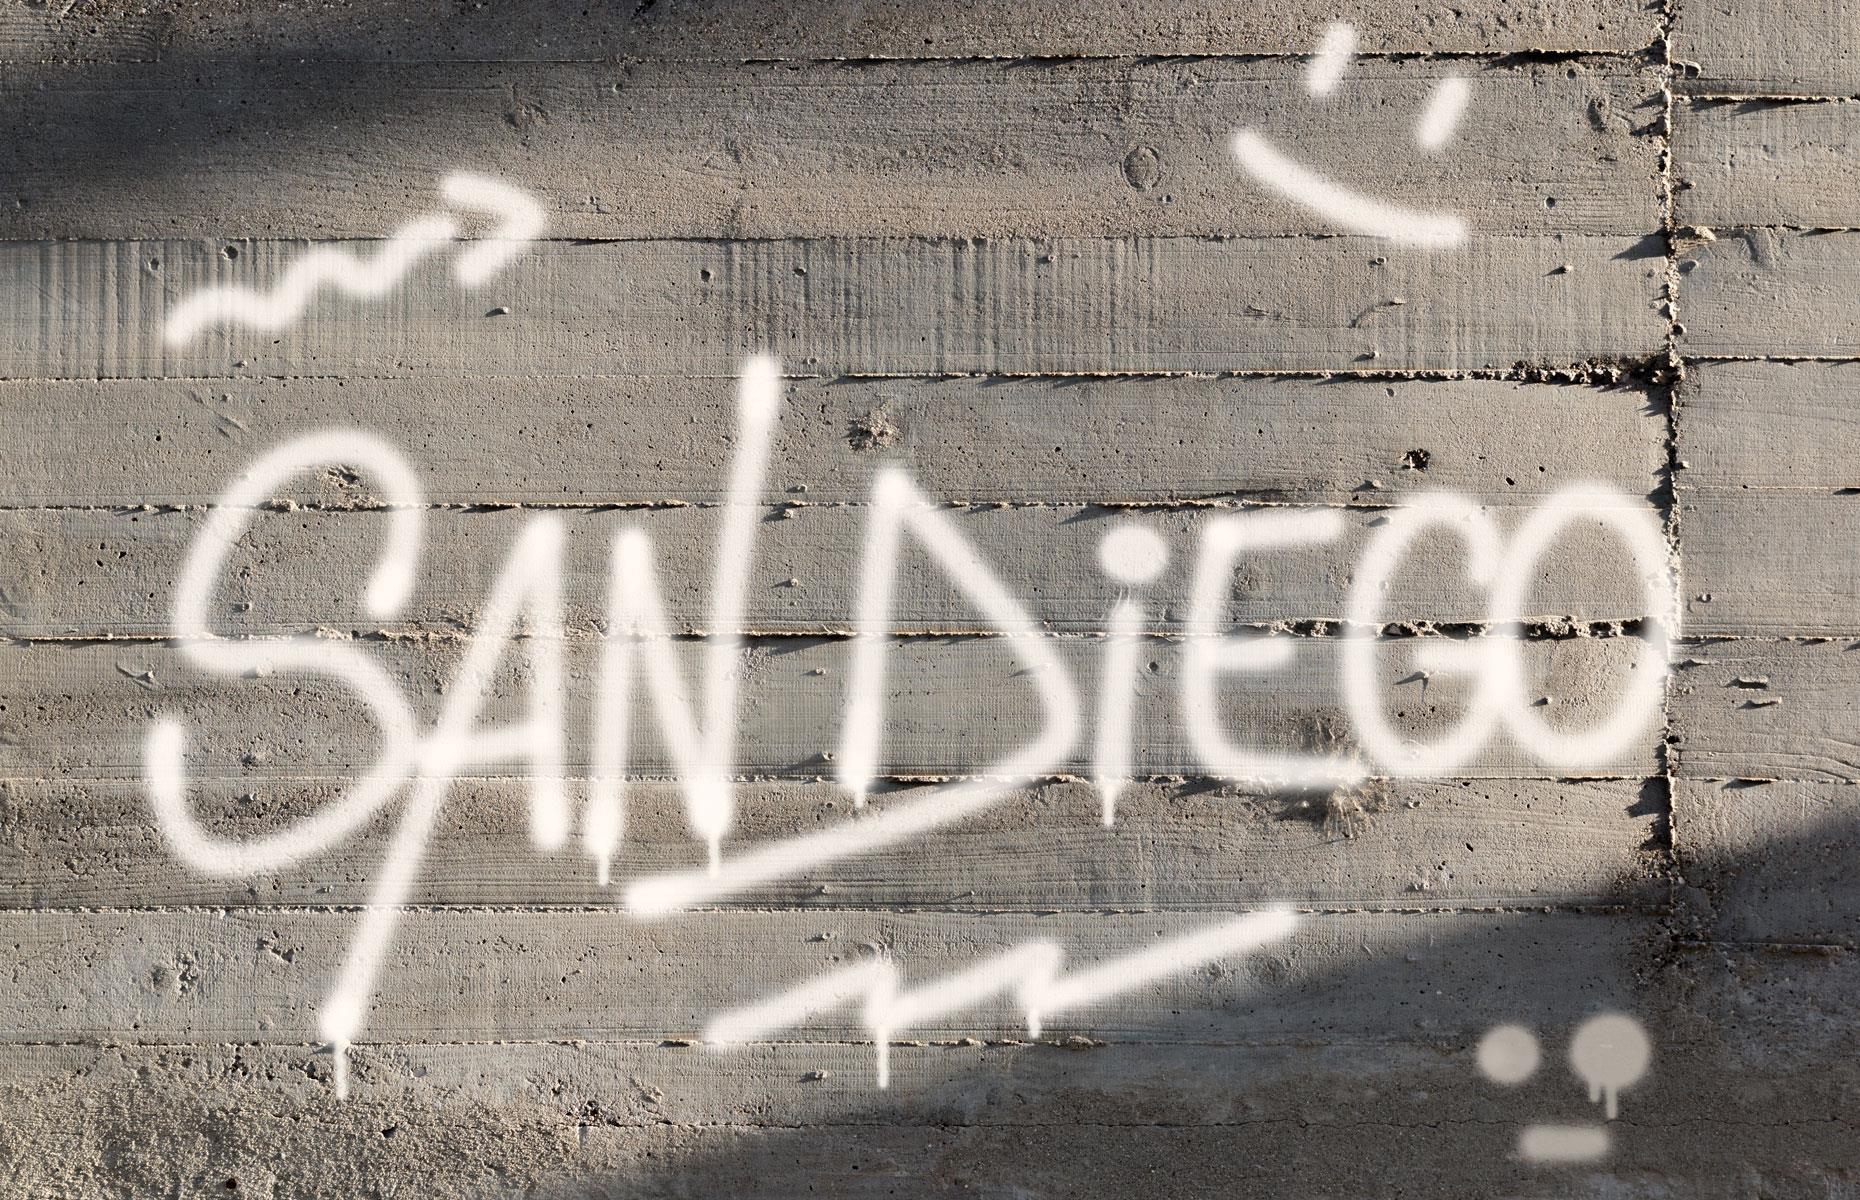 San Diego, USA: Cash for spotting graffiti artists